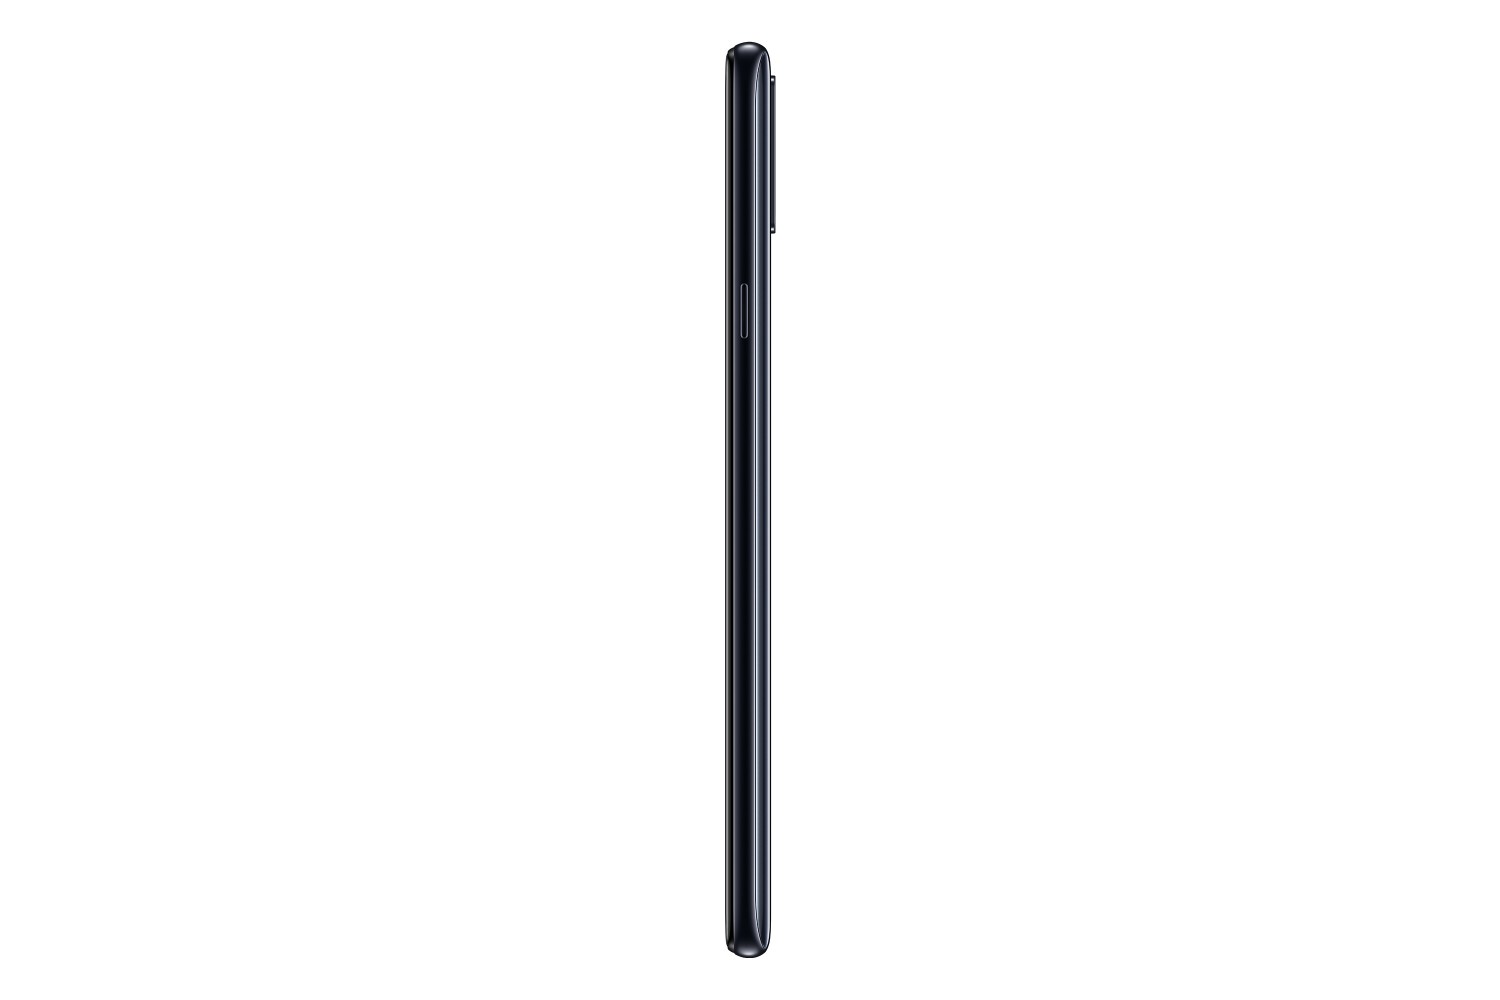 Samsung Galaxy A20s SM-207 3GB/32GB černá